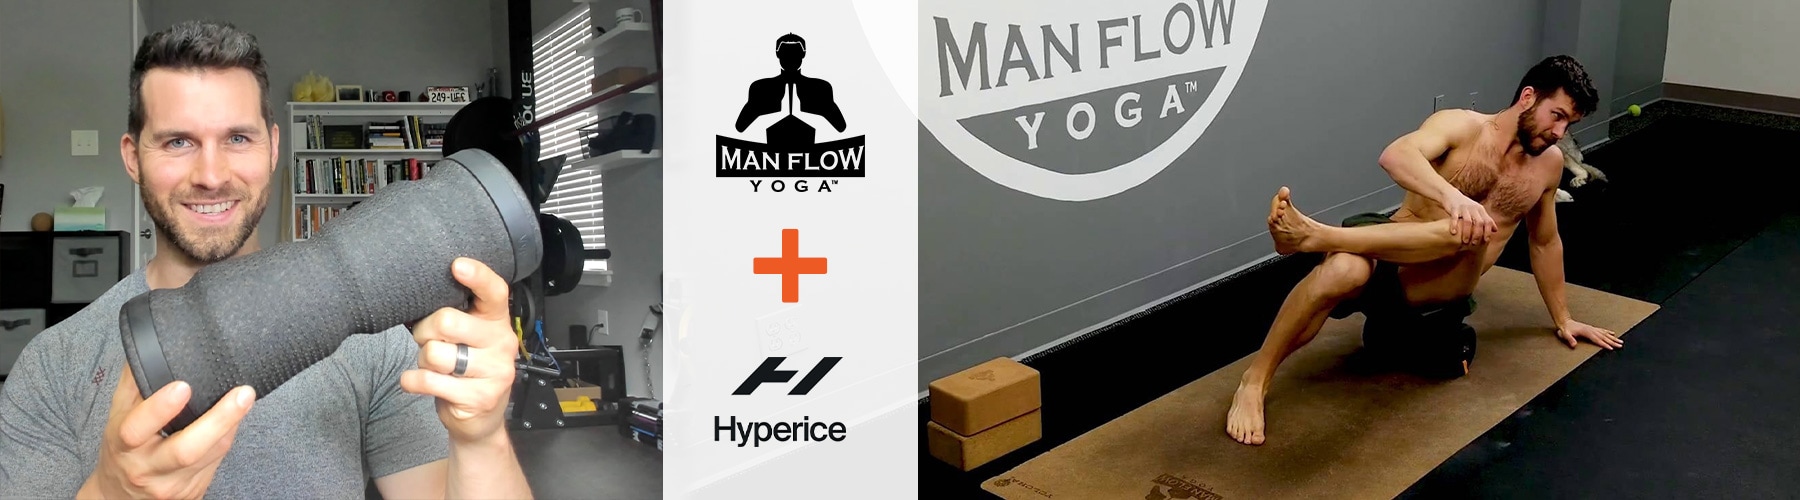 Rhone & Man Flow Yoga GIVEAWAY!!